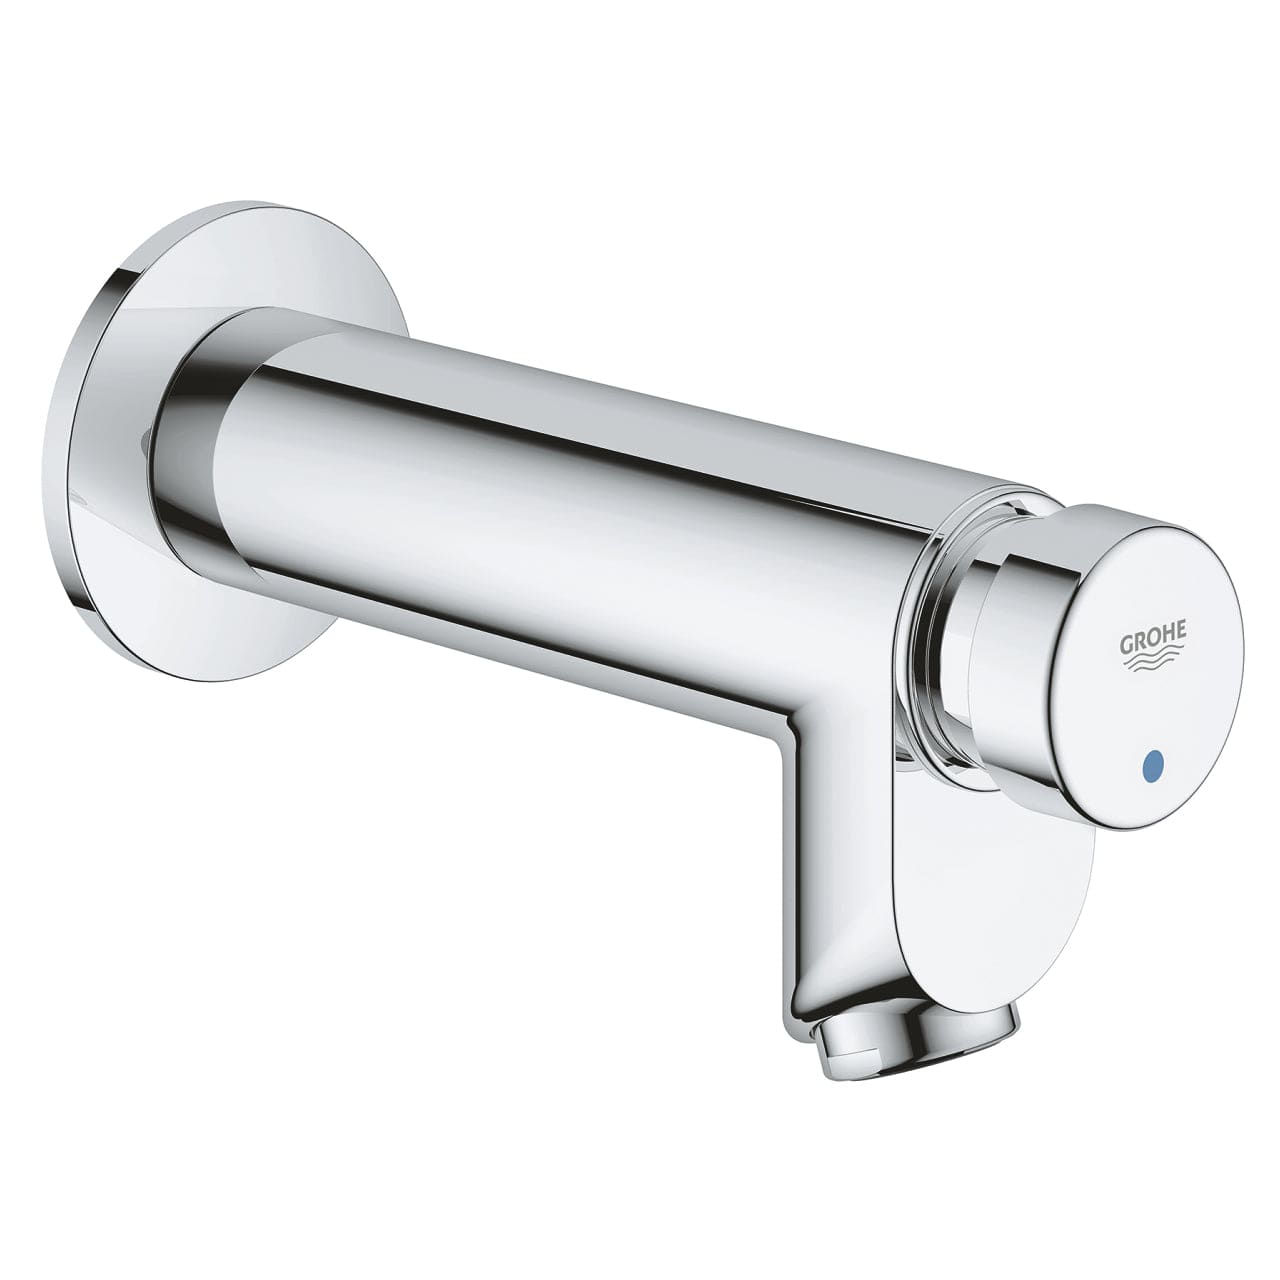 Grohe Euroeco Cosmopolitan T Self-closing Pillar Tap 1/2″, Chrome | Supply Master | Accra, Ghana Bathroom Faucet Buy Tools hardware Building materials